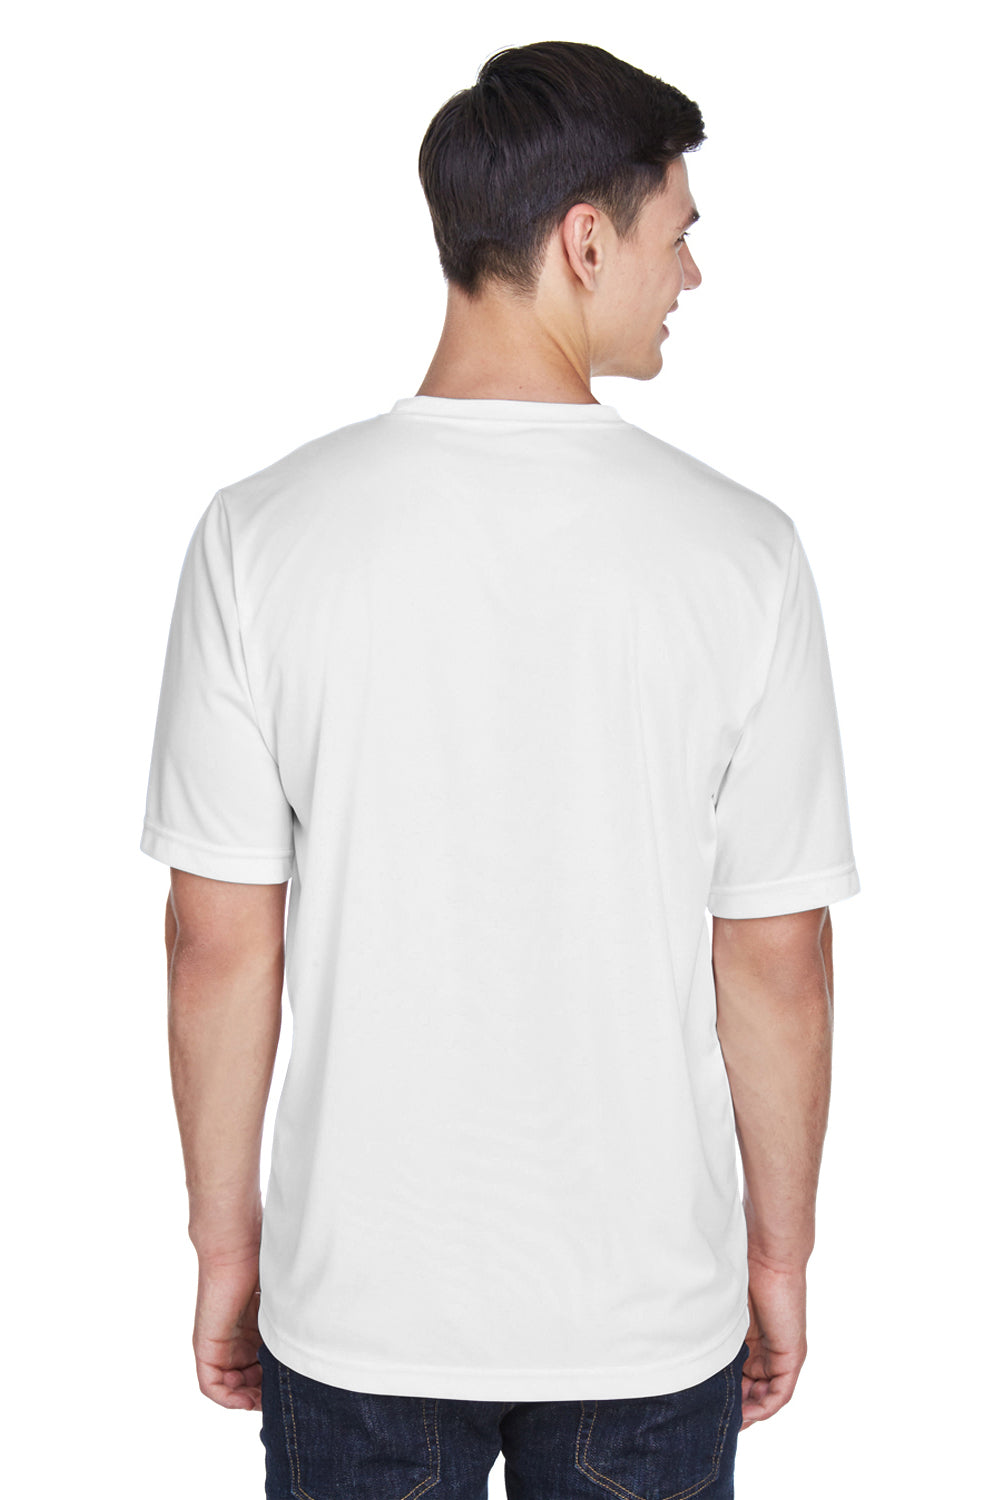 Team 365 TT11 Mens Zone Performance Moisture Wicking Short Sleeve Crewneck T-Shirt White Back